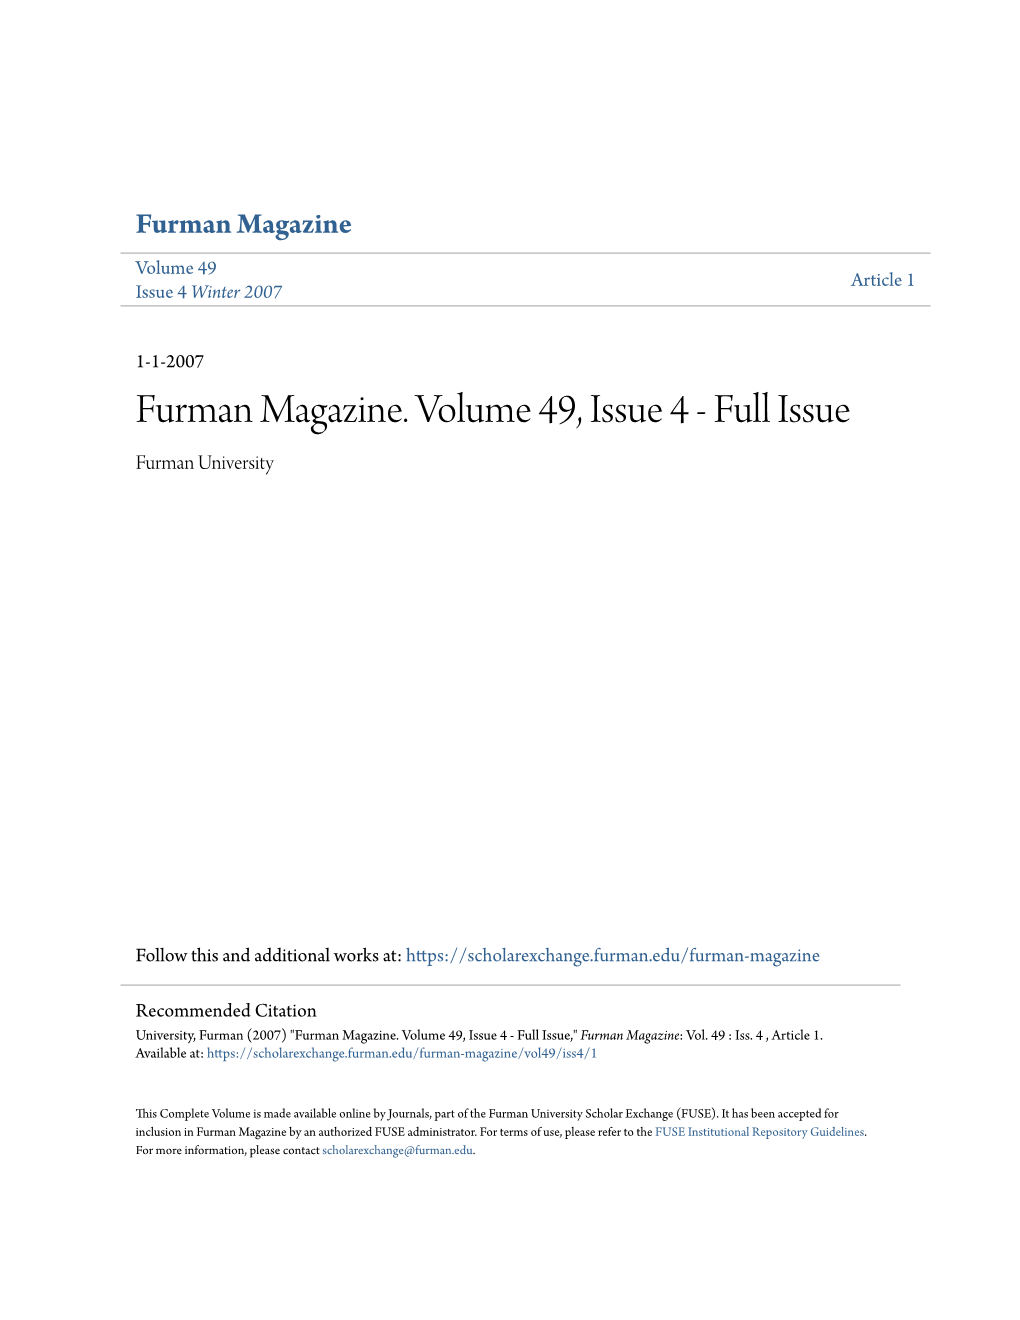 Furman Magazine. Volume 49, Issue 4 - Full Issue Furman University